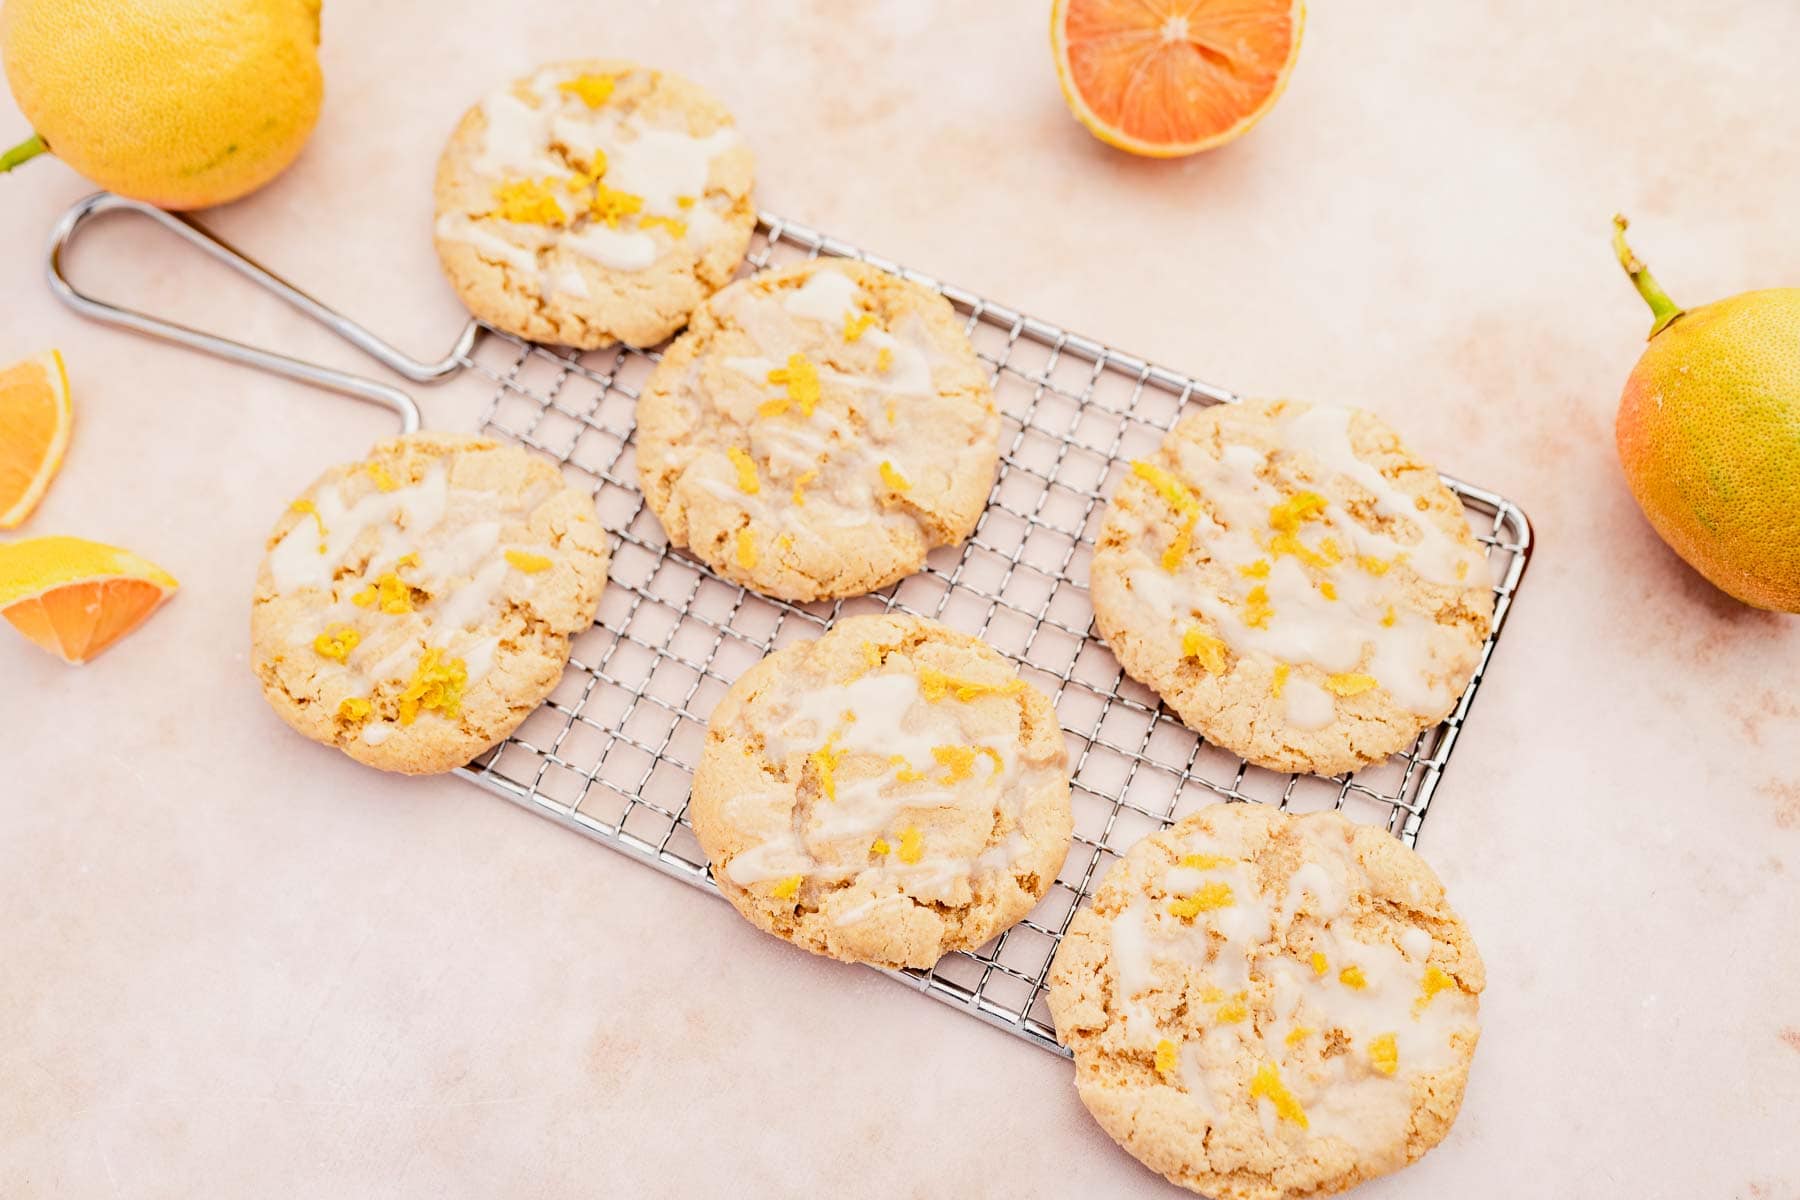 Gluten-free orange glazed cookies on a cooling rack.